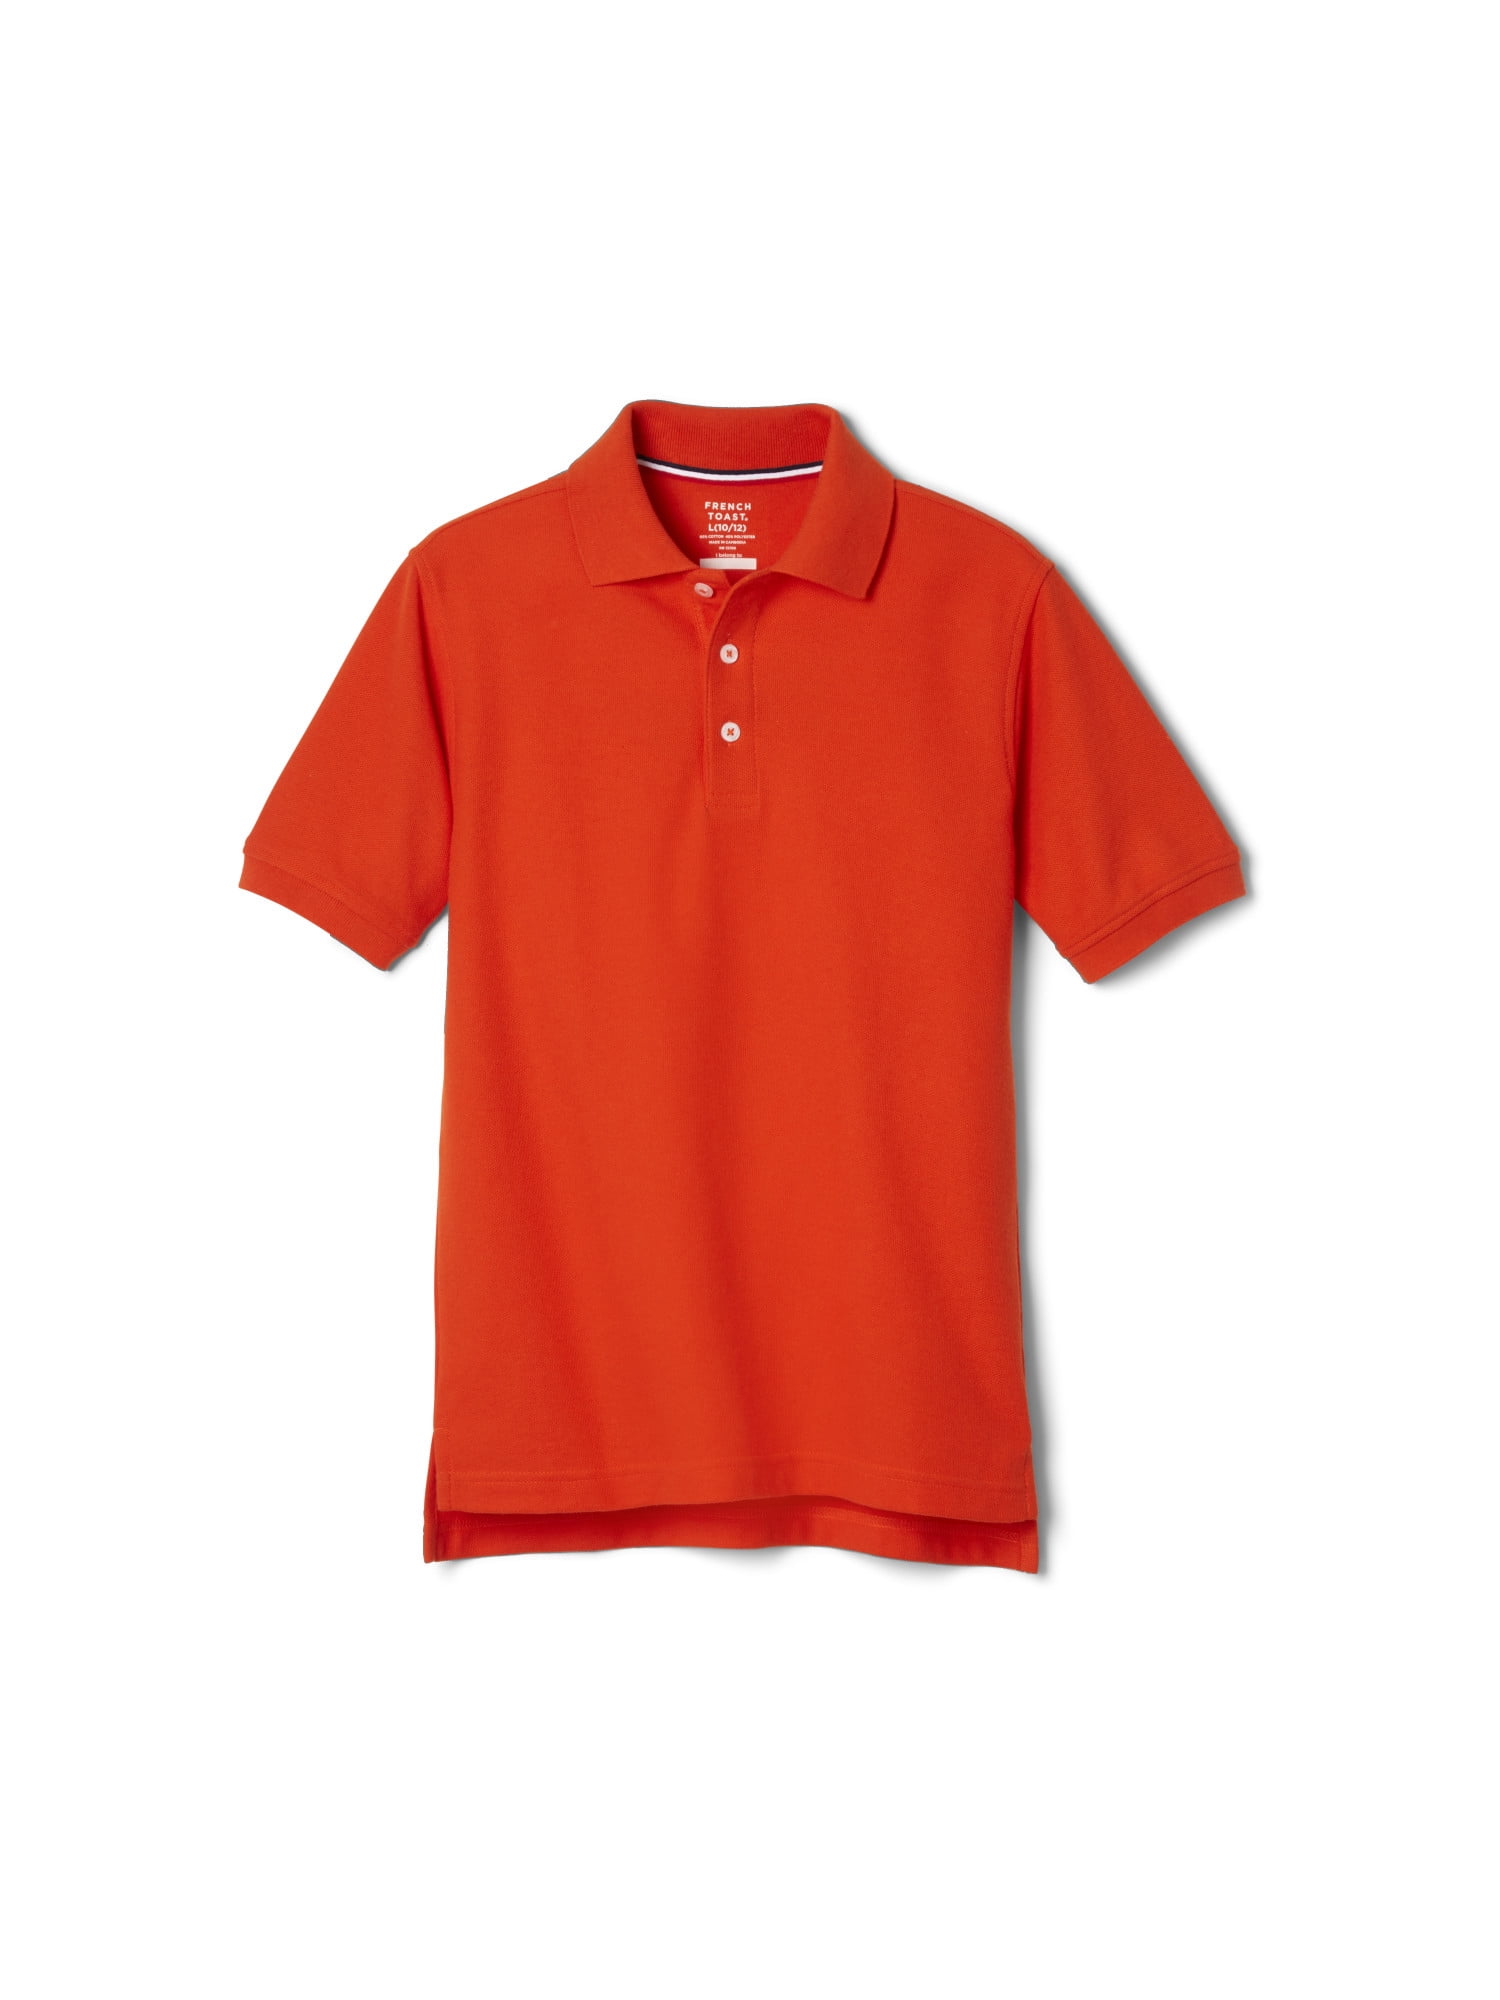 Boys Preferred School Uniform Red Polo Shirt Size 7-18/20 